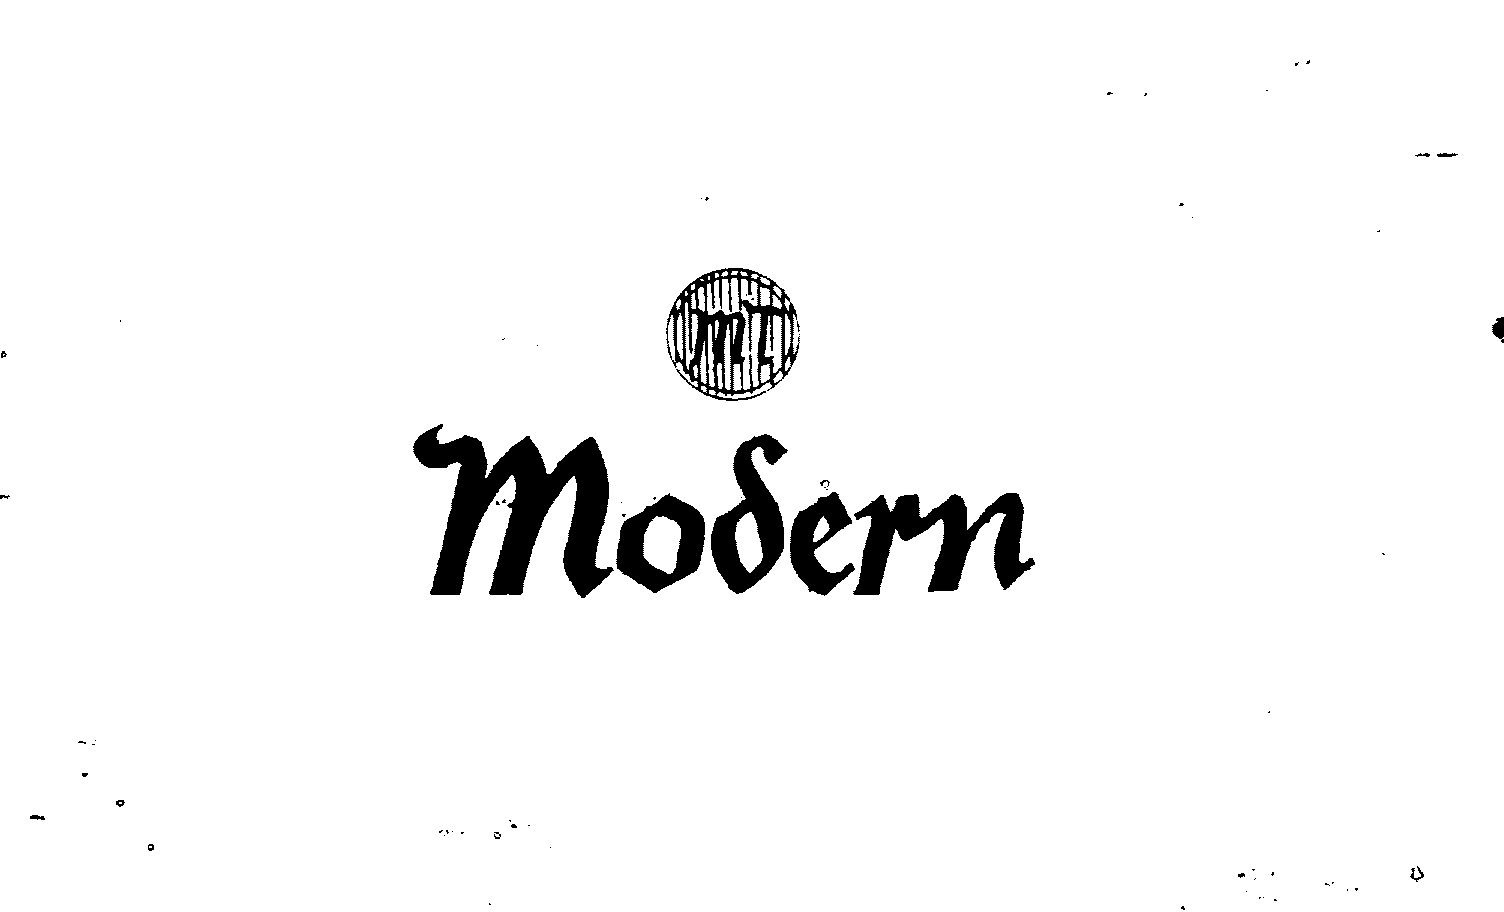 MODERN